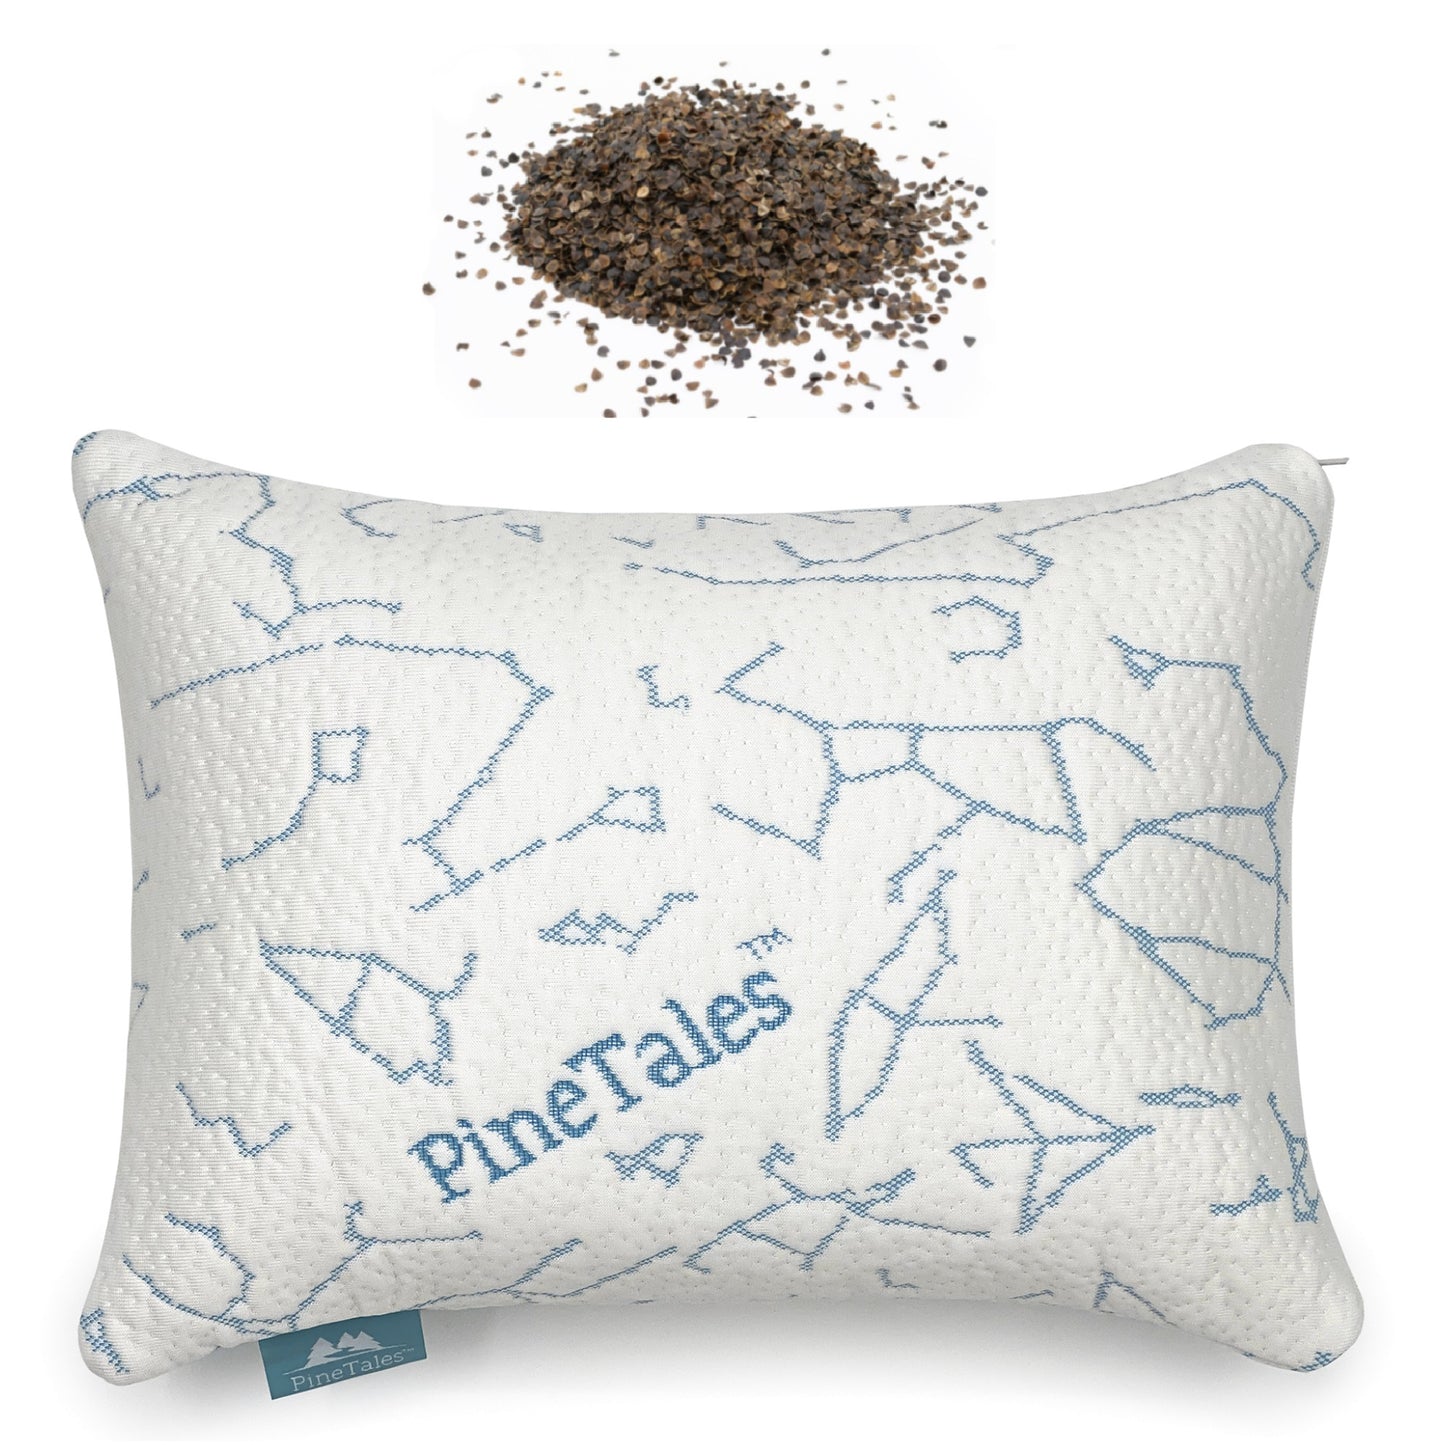 Buckwheat Travel Pillow - PineTales - Cooling